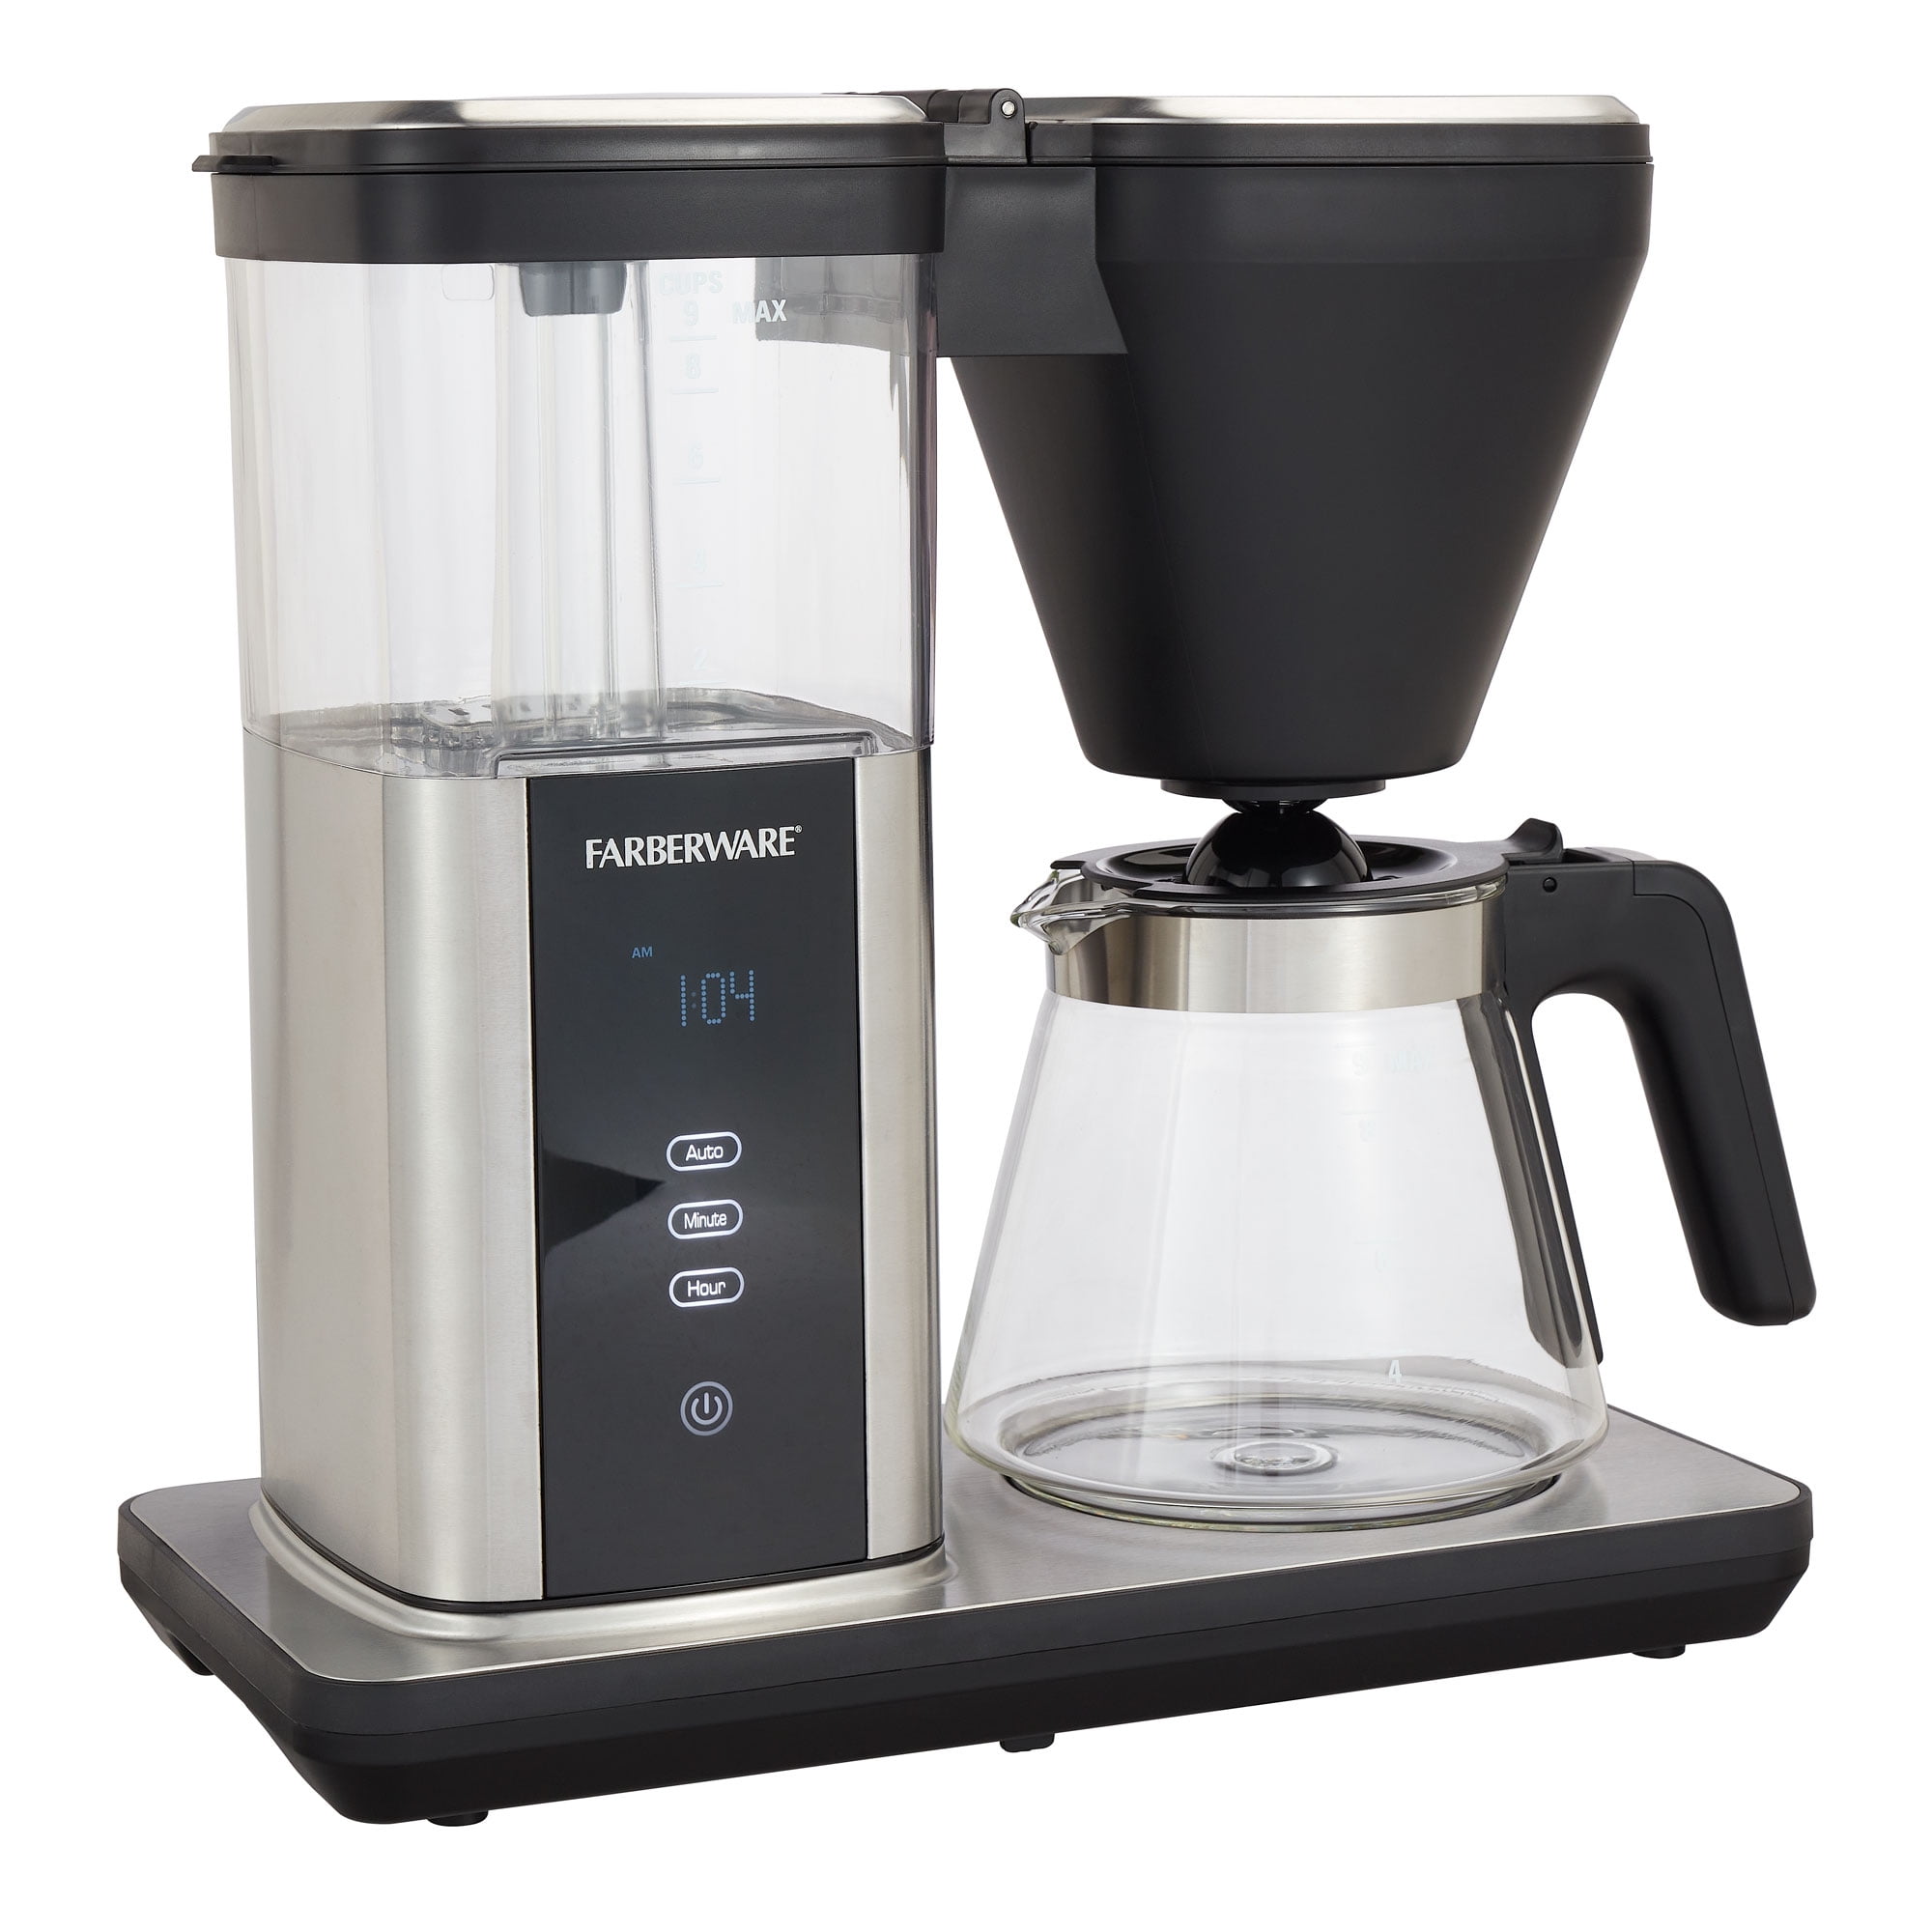 Farberware MicroBrew Coffee Maker 1-2 Cups in Minutes Hot Delicious& Fresh  Fast!